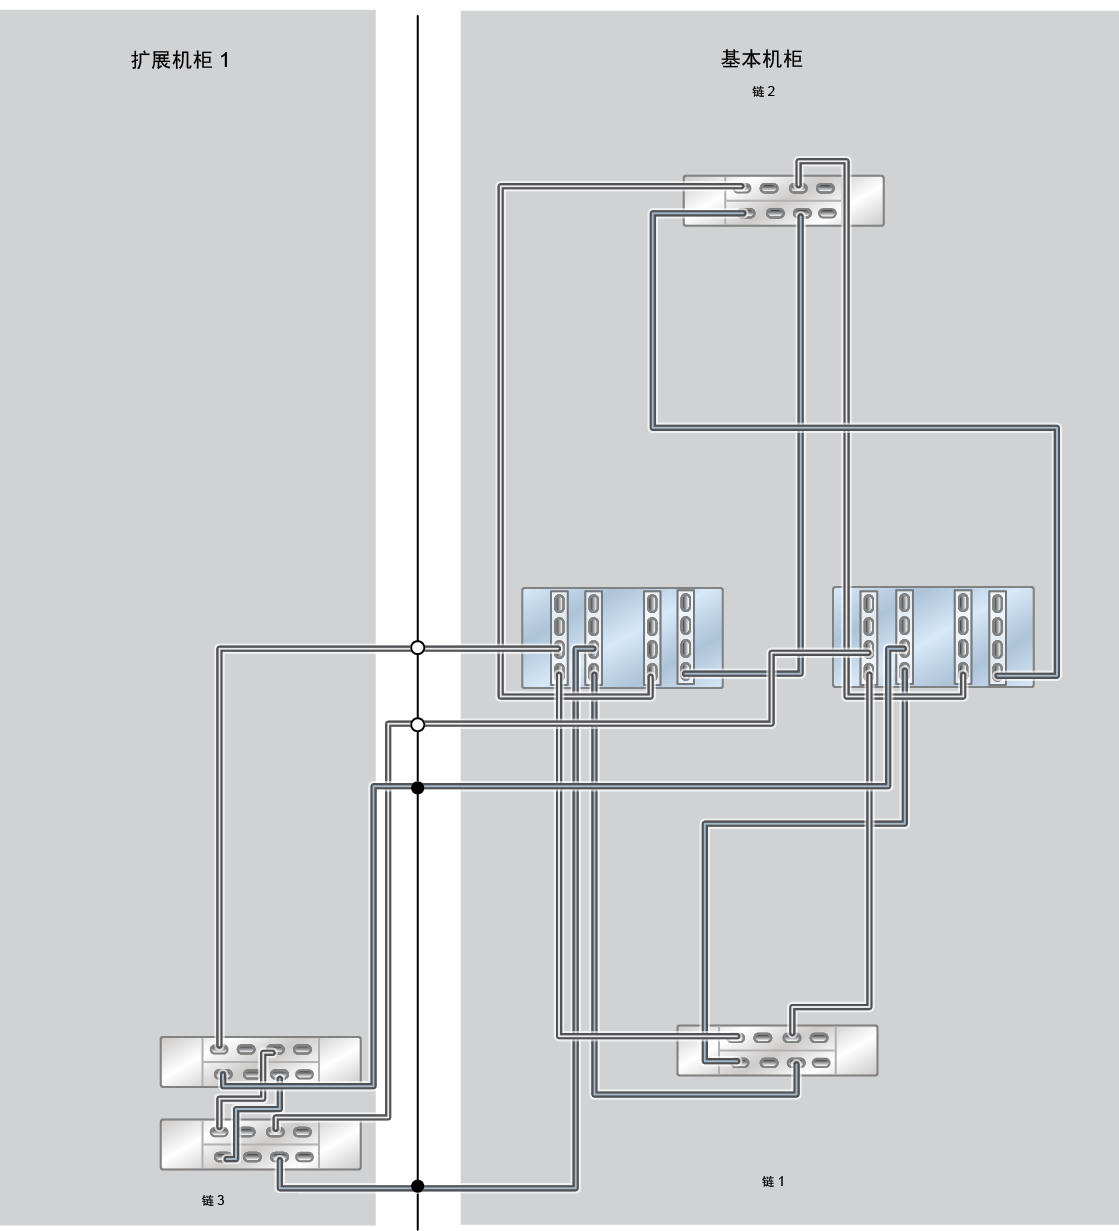 image:此图显示了具有一个扩展机柜（两个 DE3-24C 磁盘机框）的 ZS5-4 Racked System 全闪存。